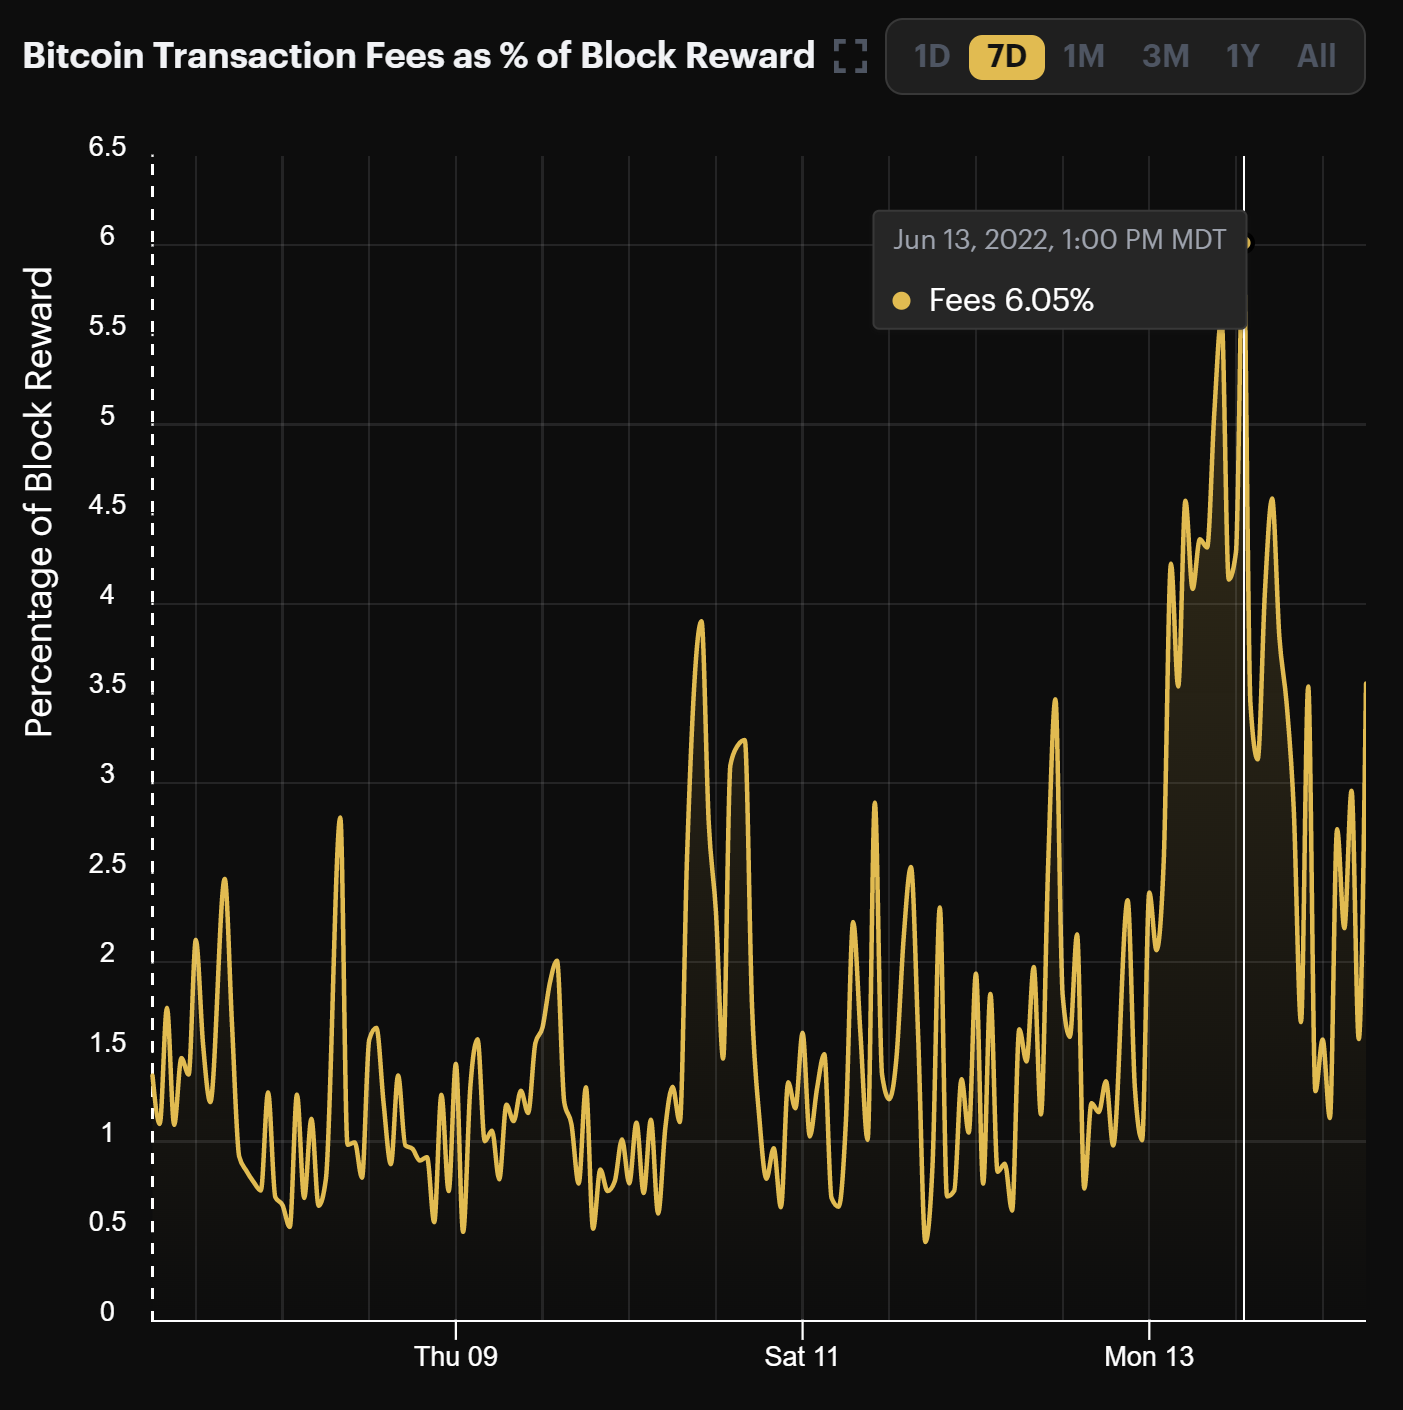 Bitcoin transaction fees as a percentage of block rewards (June 7 - June 14, 2022)